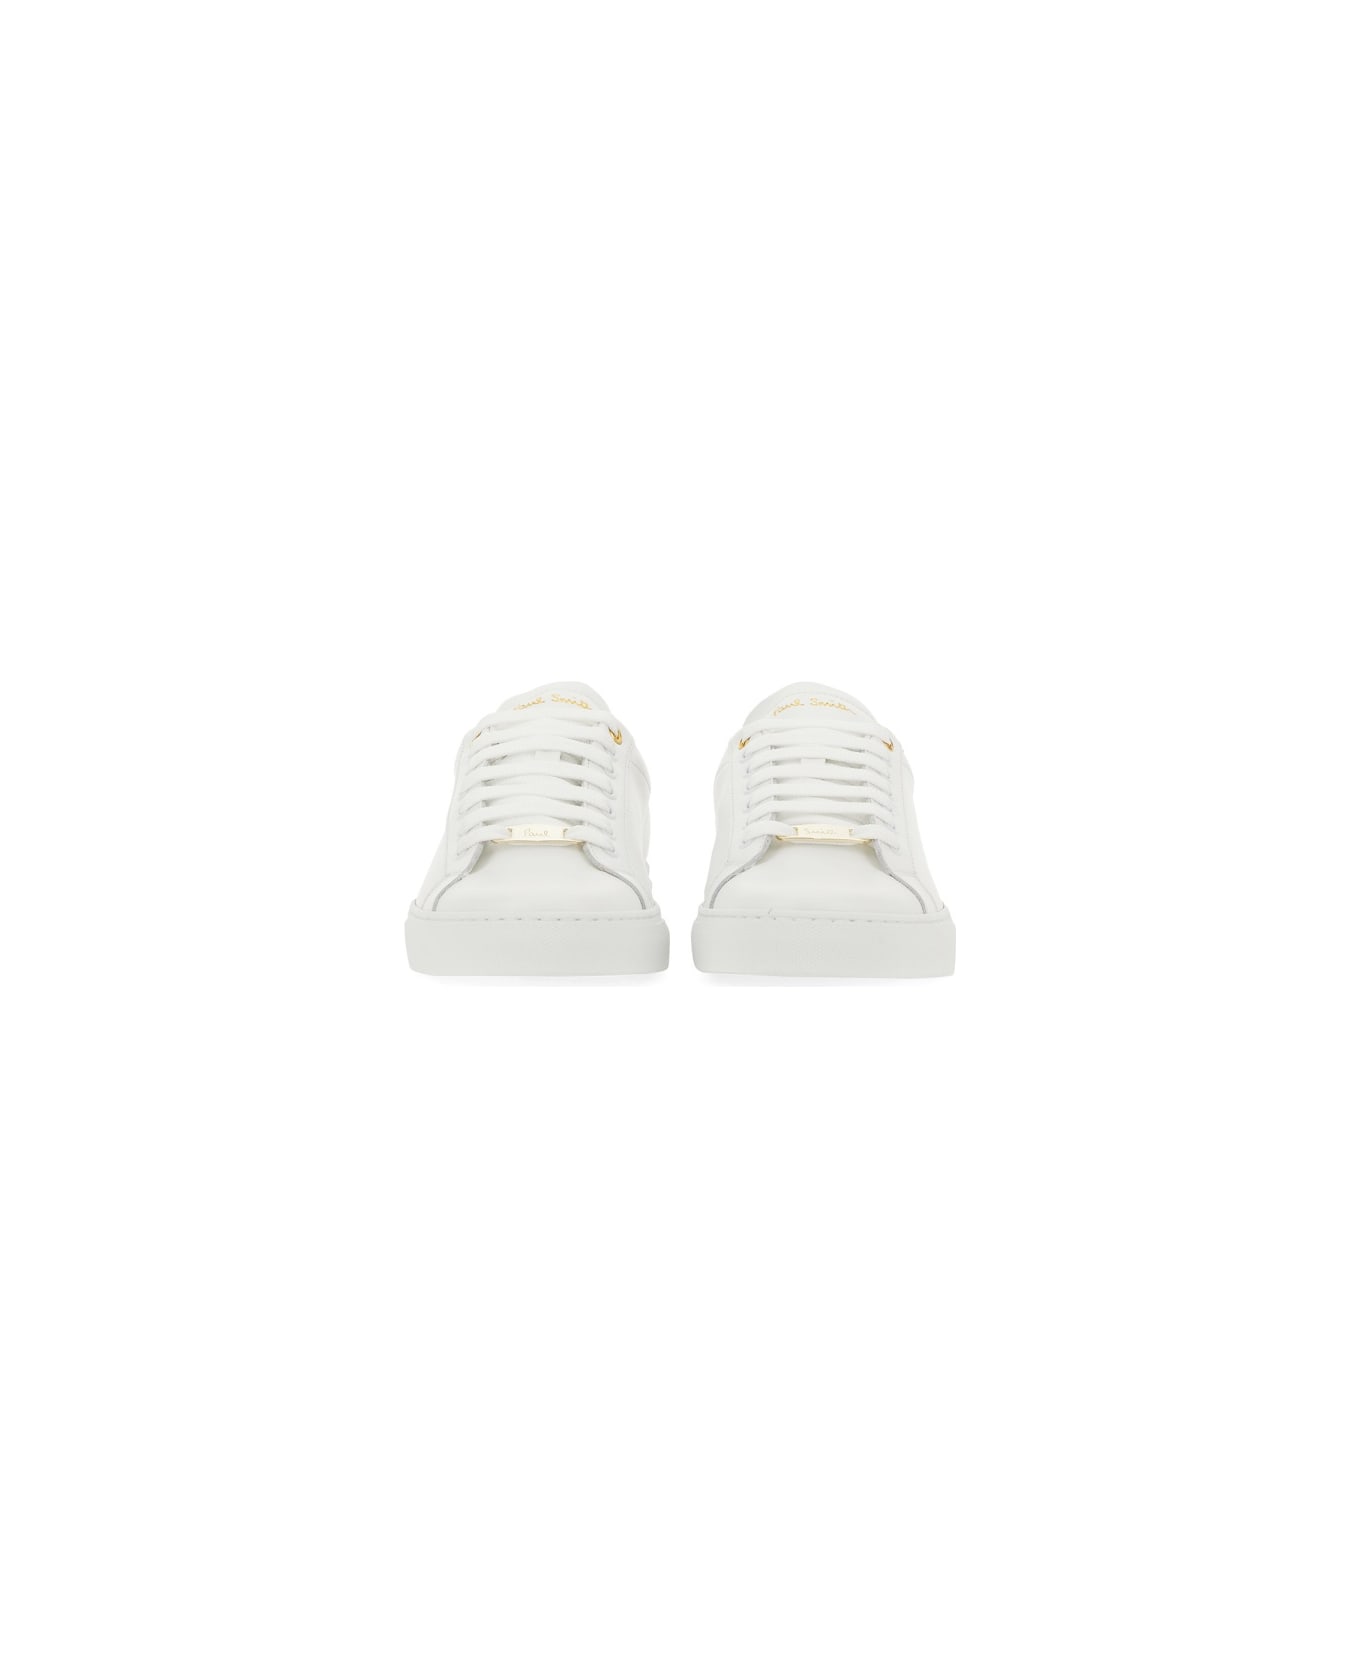 Paul Smith Sneaker With Logo - White